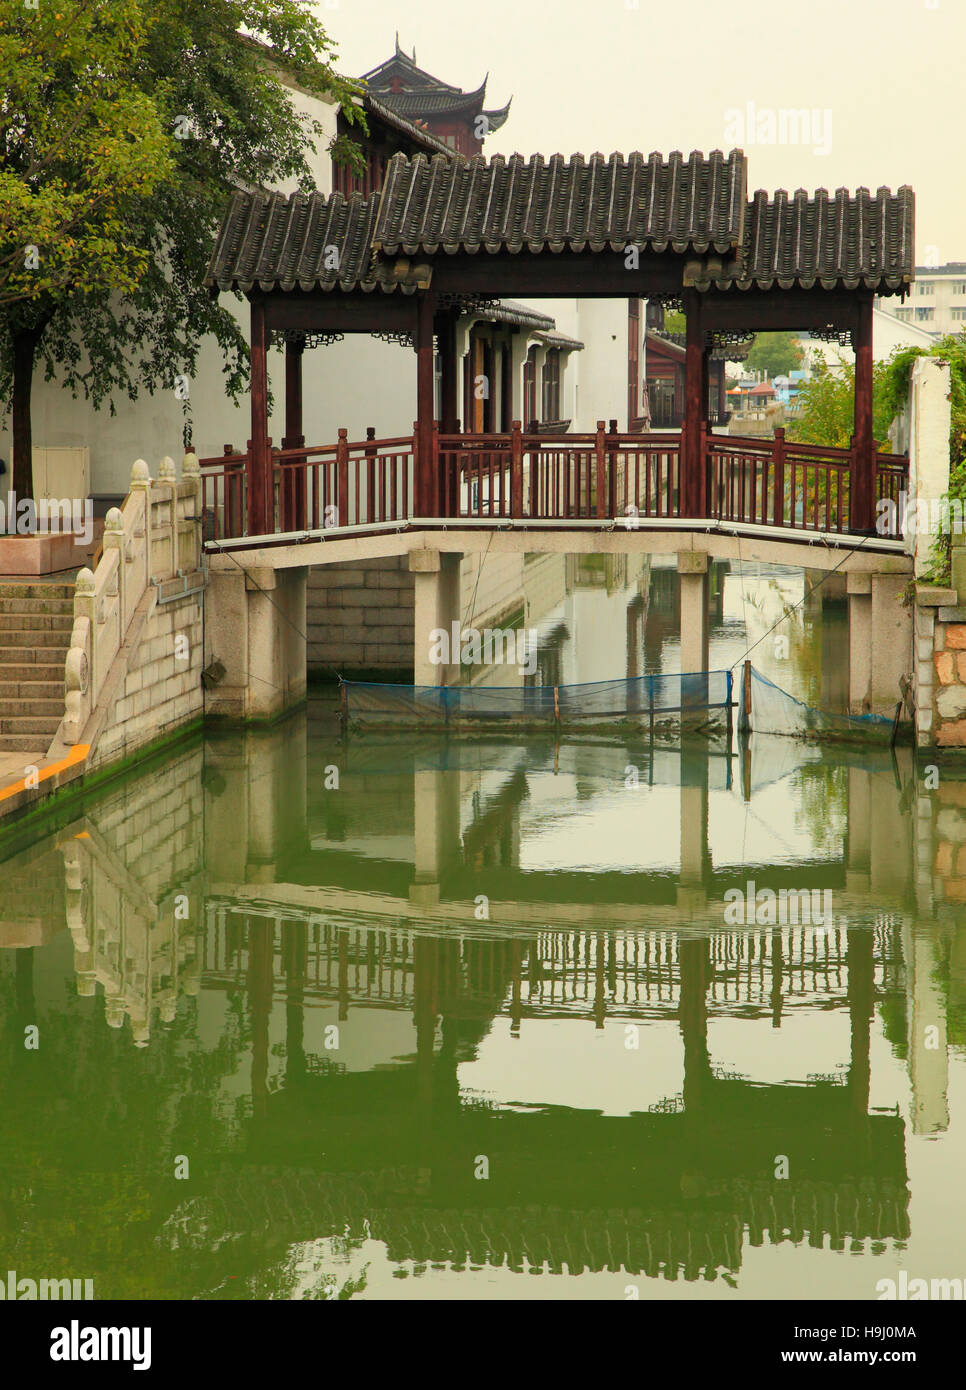 China, Jiangsu, Suzhou, canal scene, bridge, Stock Photo